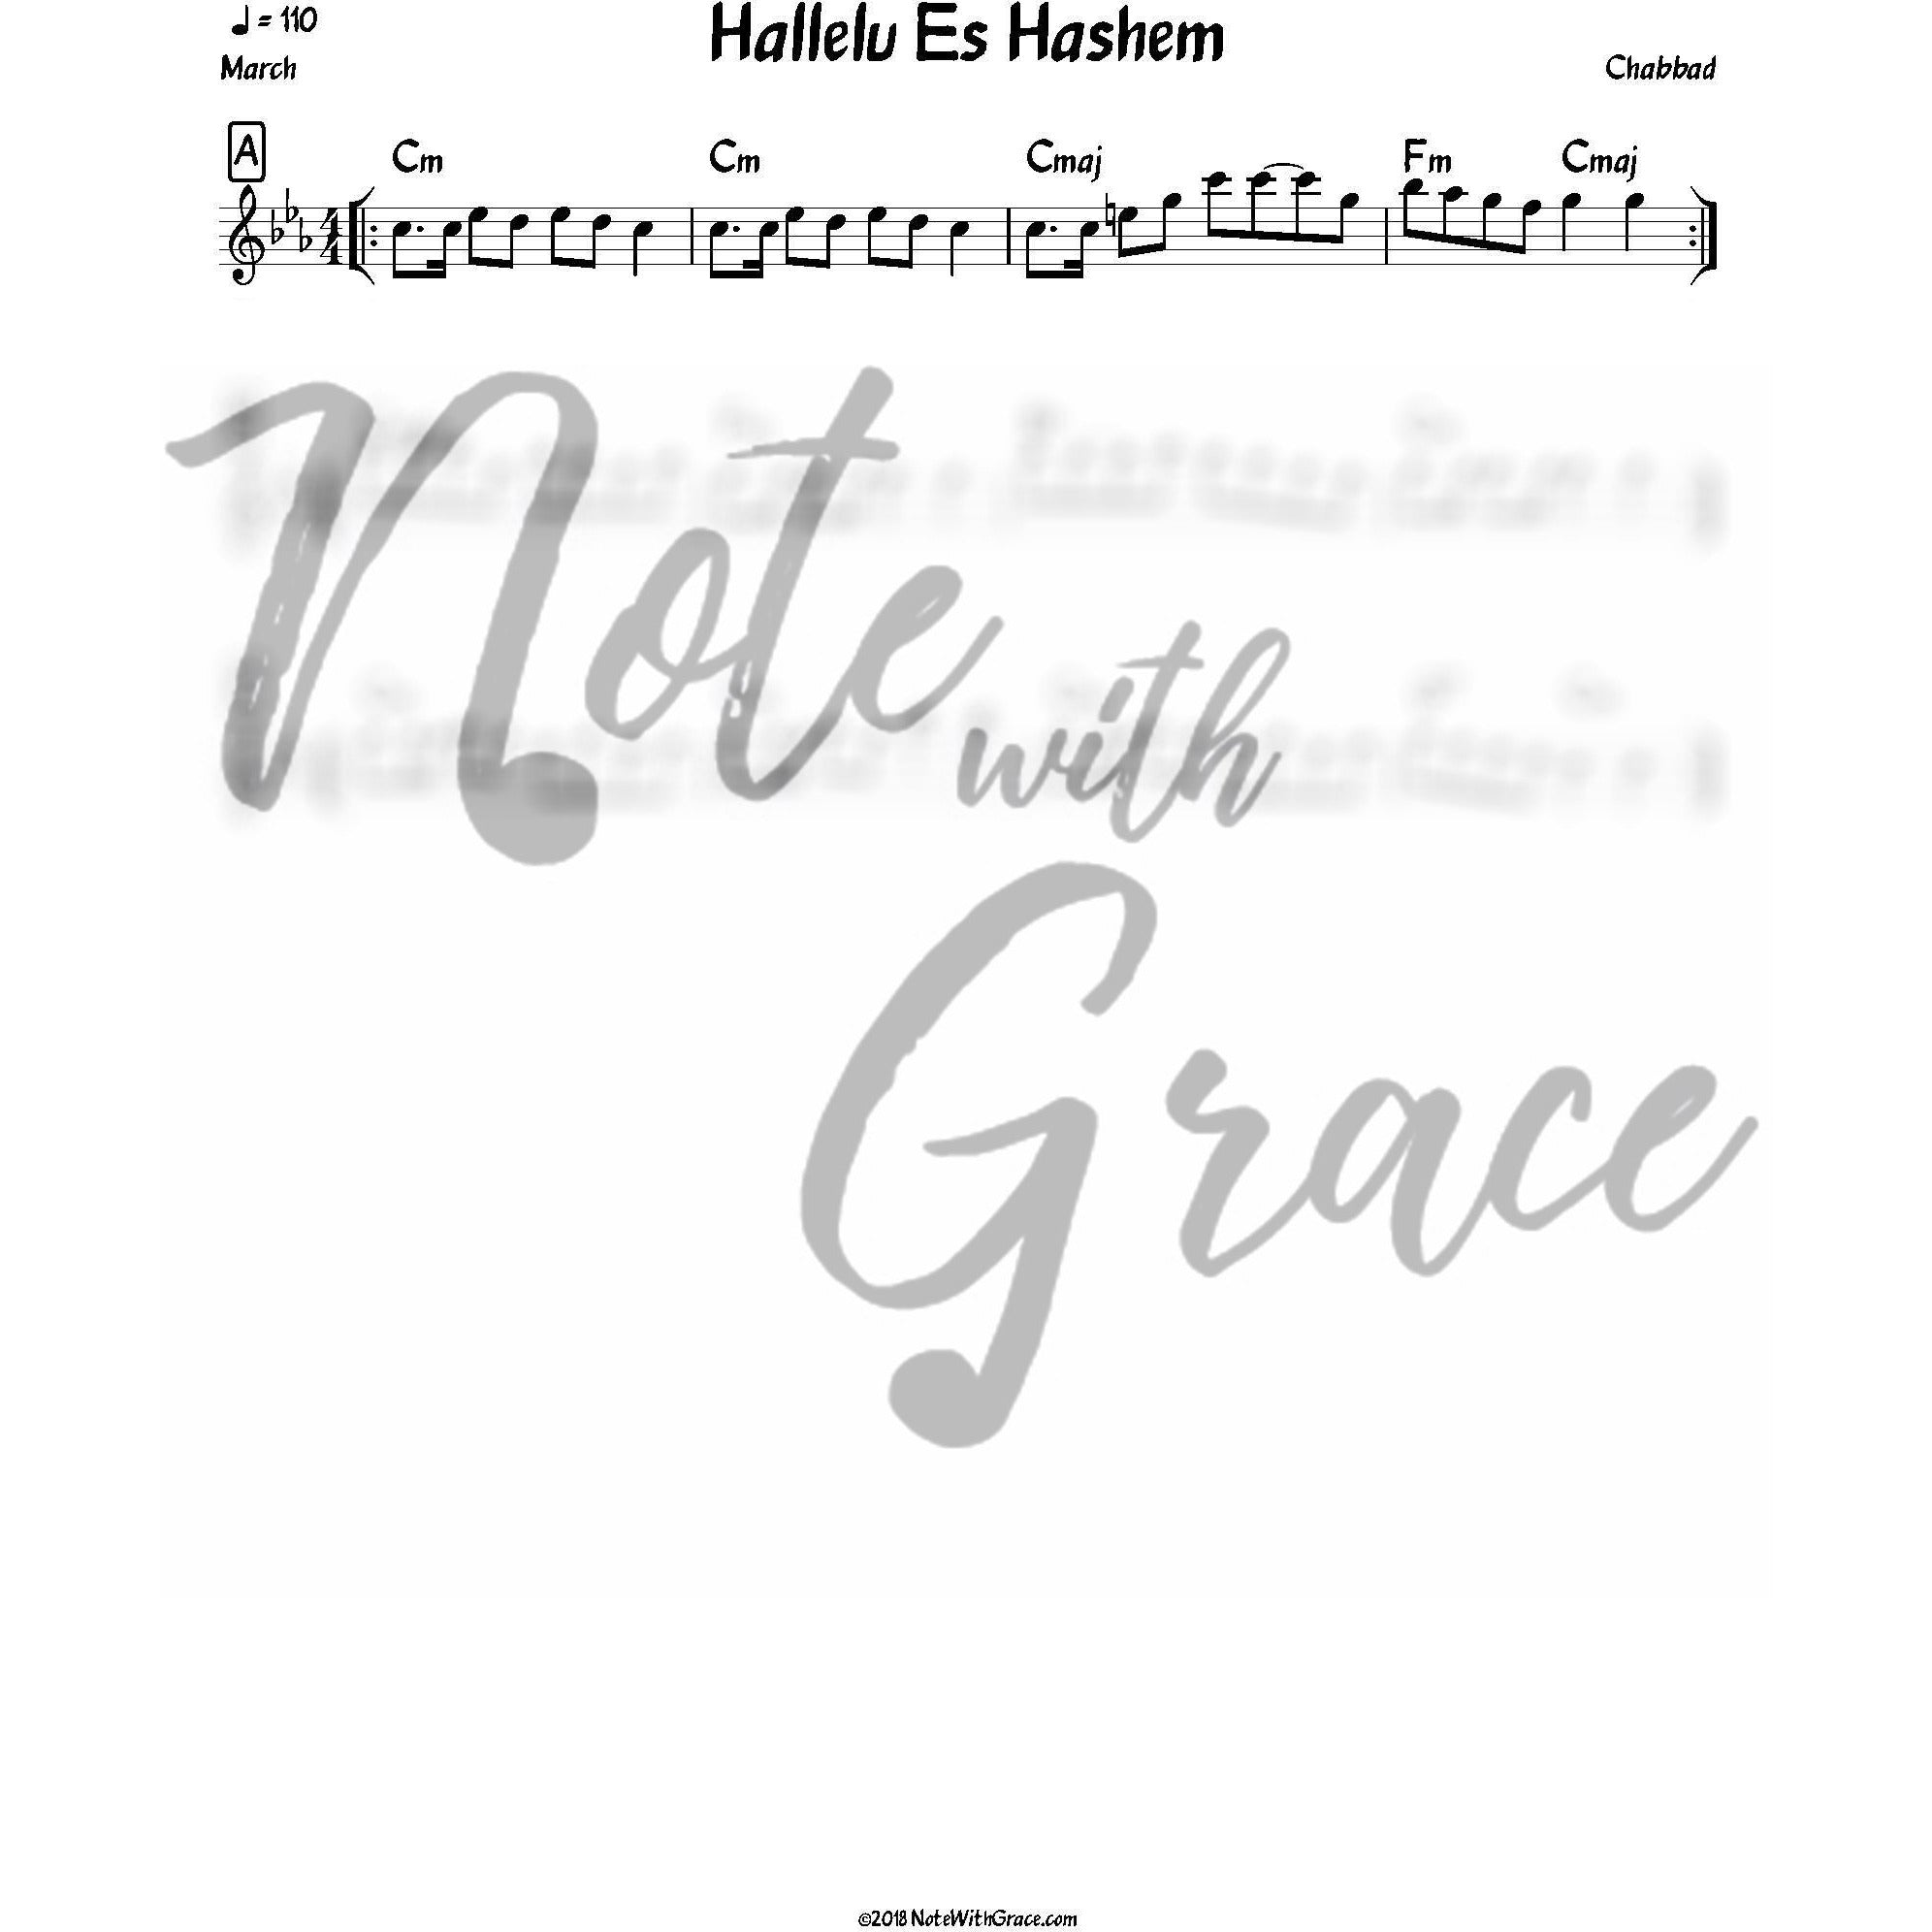 Hallelu Es Hashem Lead Sheet (Chabad)-Sheet music-NoteWithGrace.com